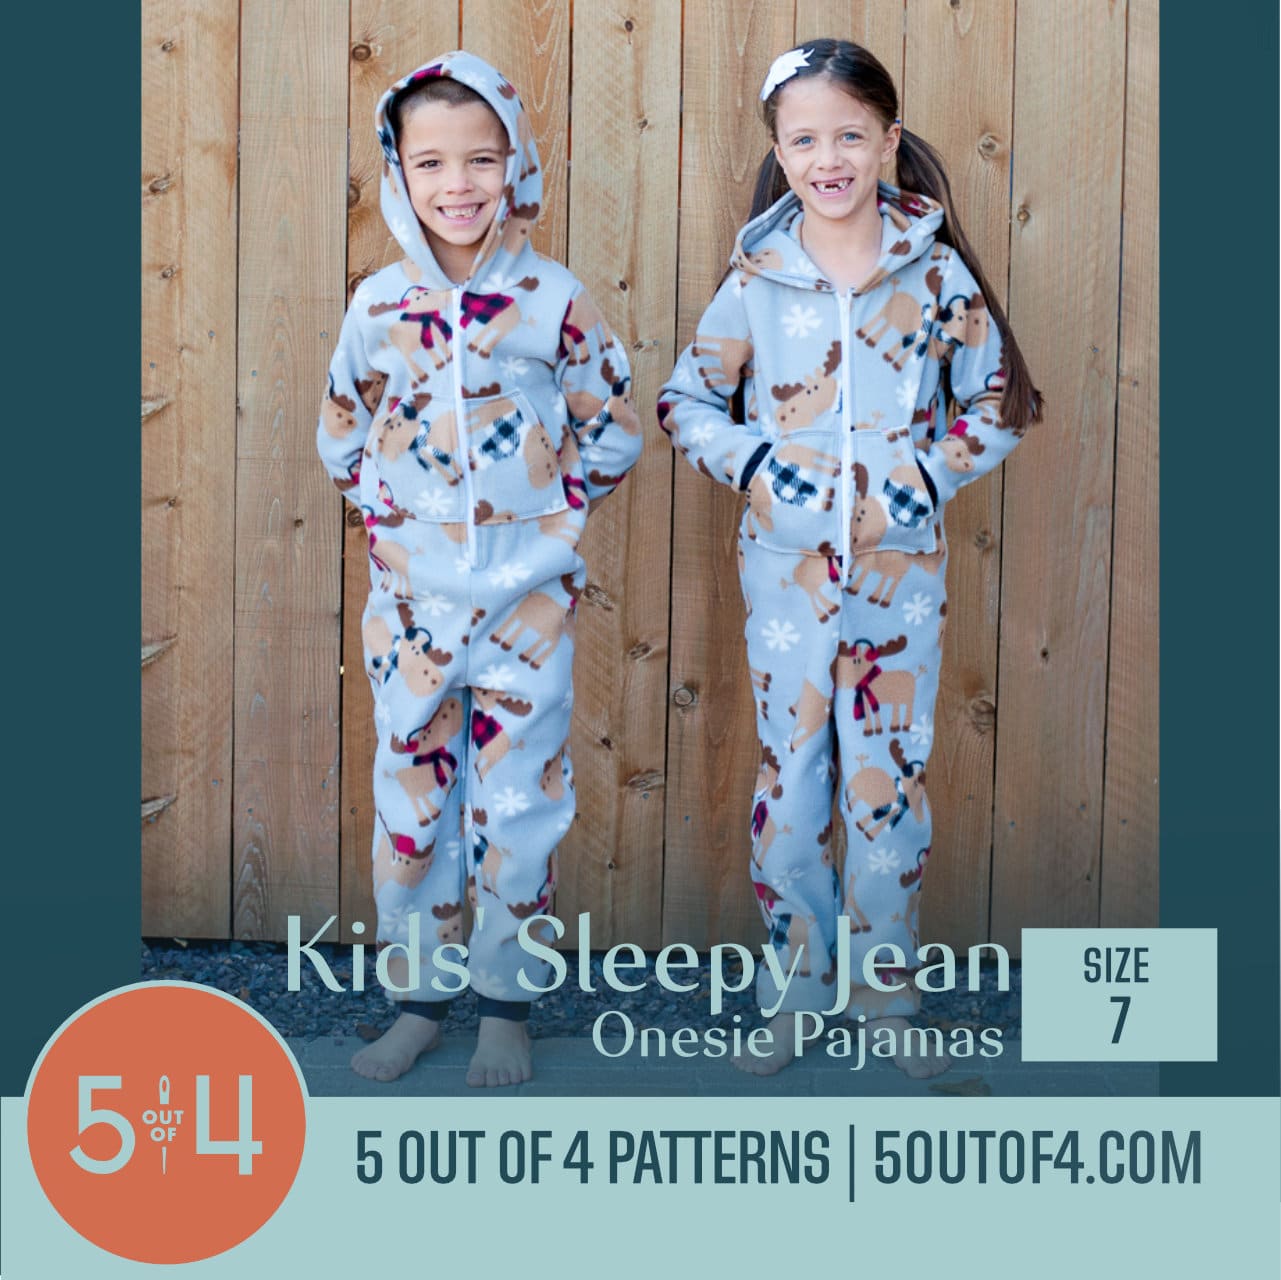 52+ Designs Sewing Patterns For Toddler Pyjama Onesies - DechelleDerren